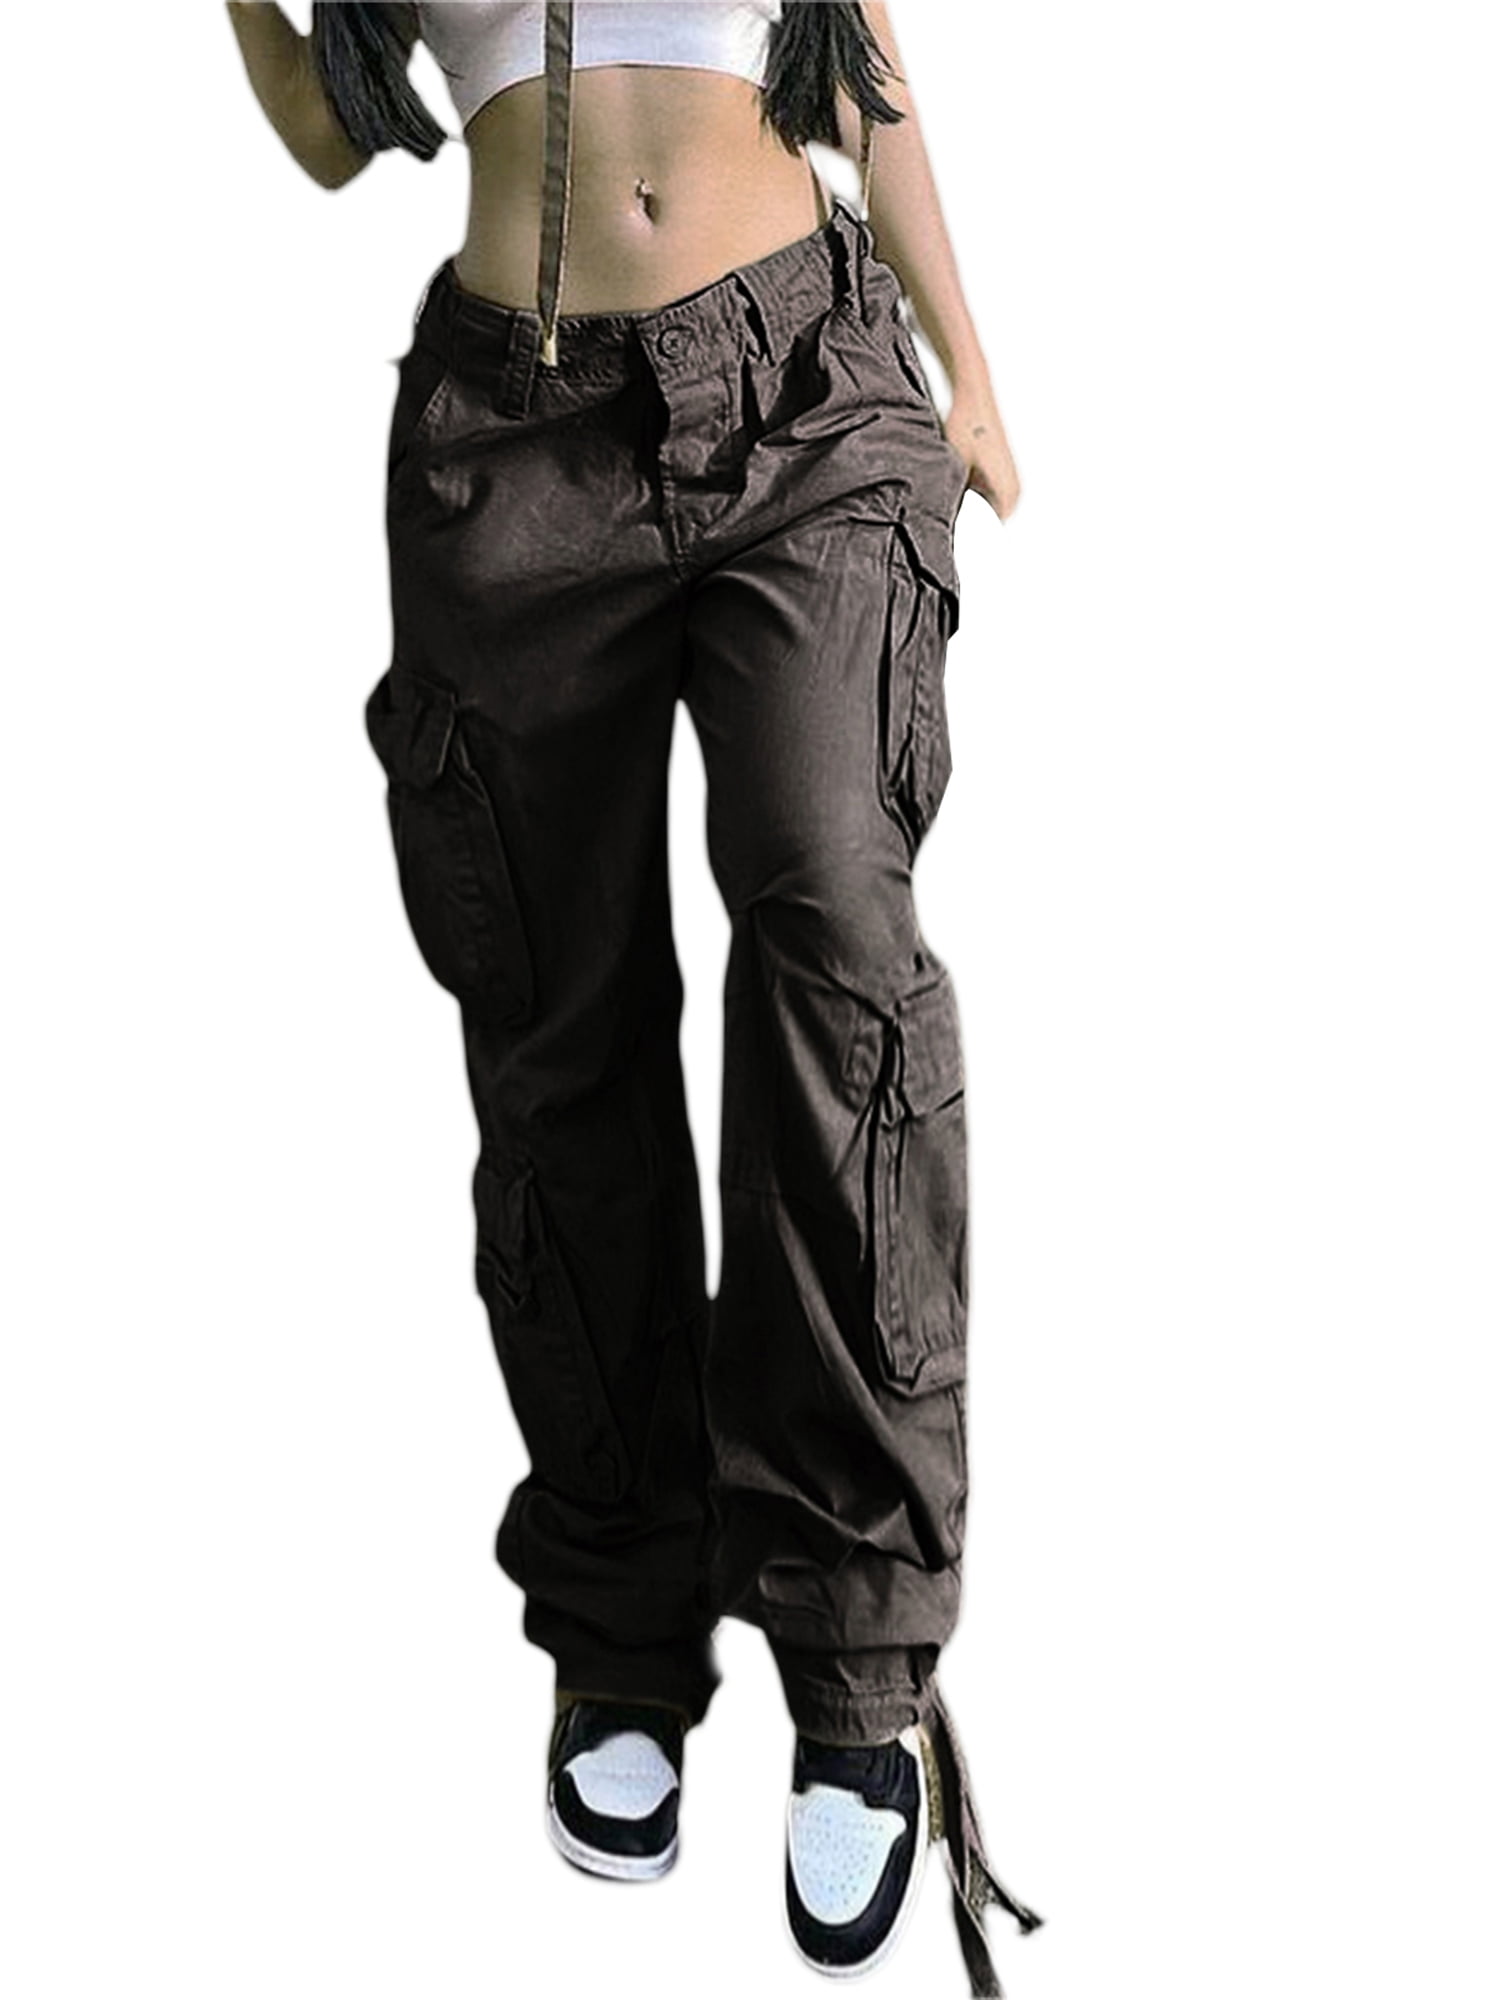  AMEEQ Pants for Women Flap Pocket Side Cargo Pants